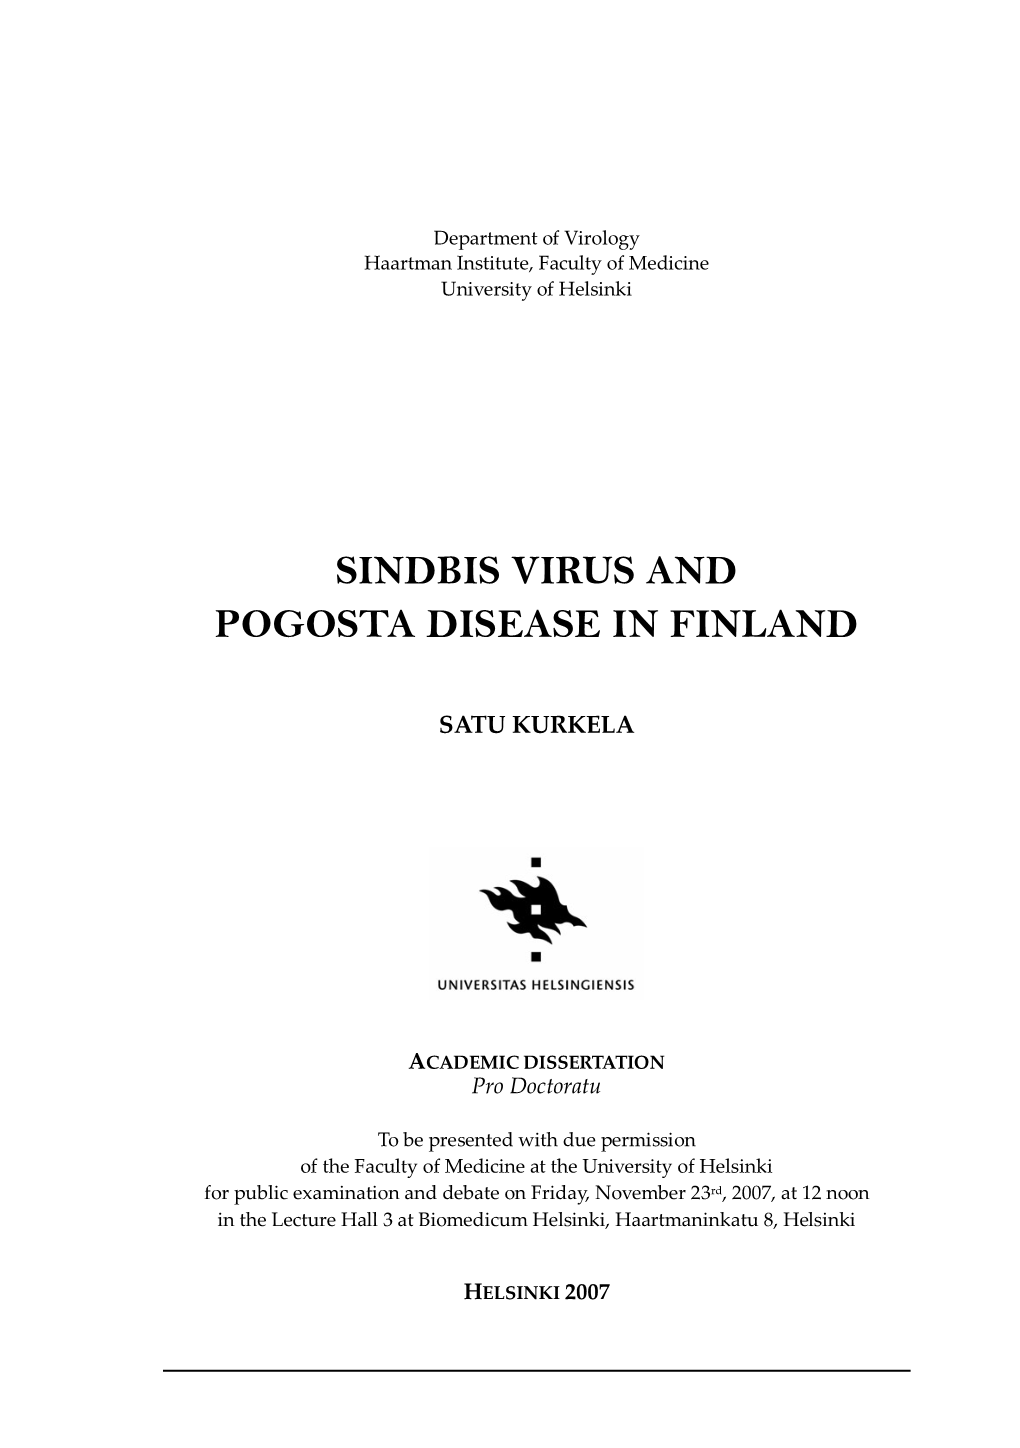 Sindbis Virus and Pogosta Disease in Finland